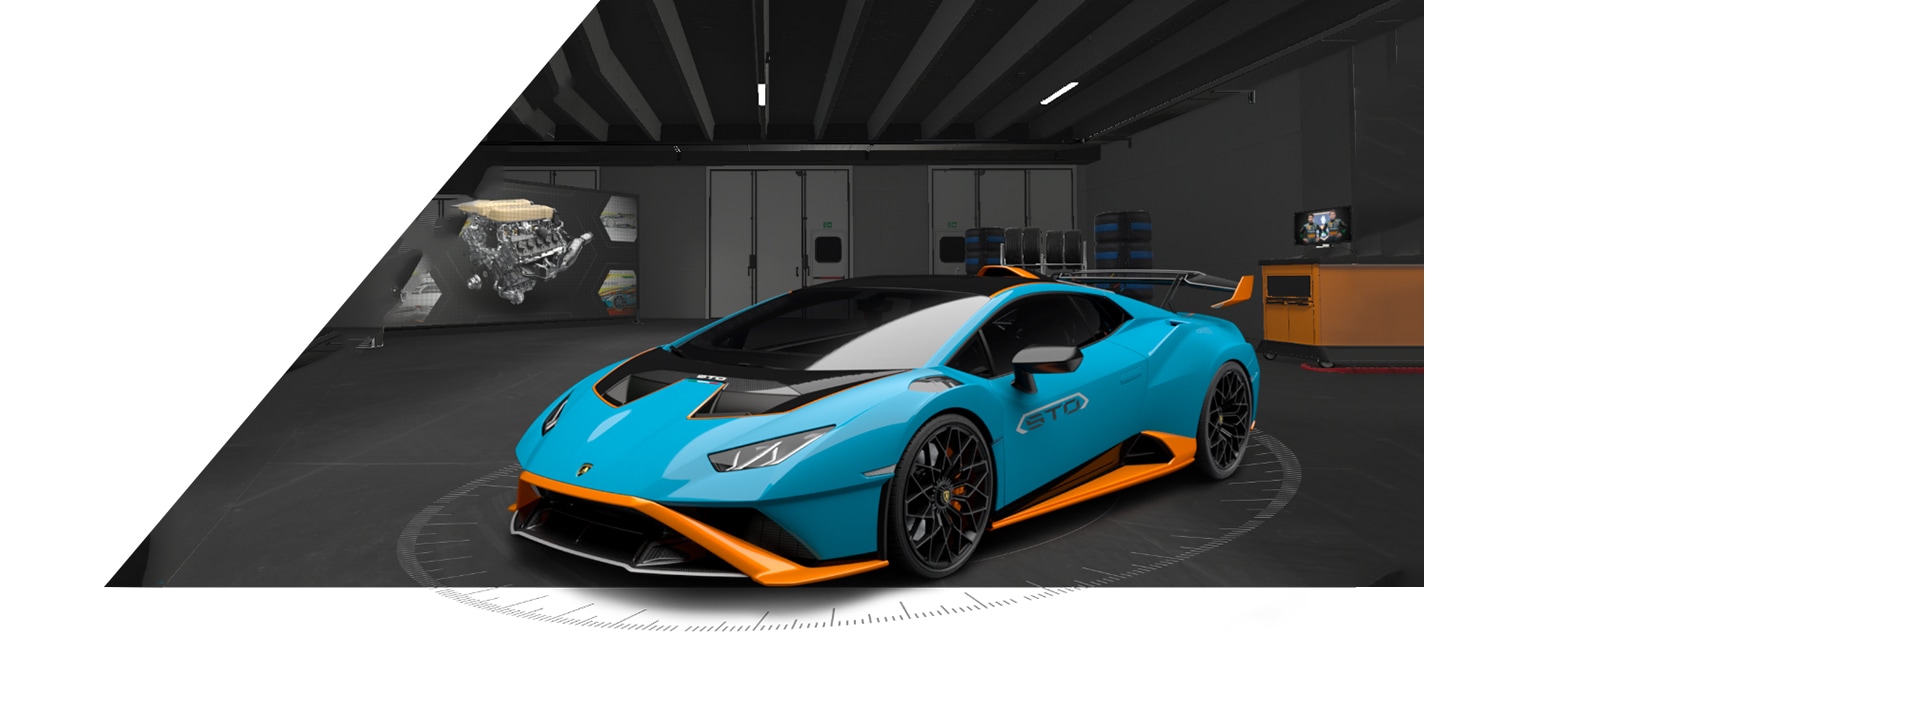 Bridgestone se une a Lamborghini para desarrollar neumáticos Potenza Race a medida para el supercoche Huracán STO